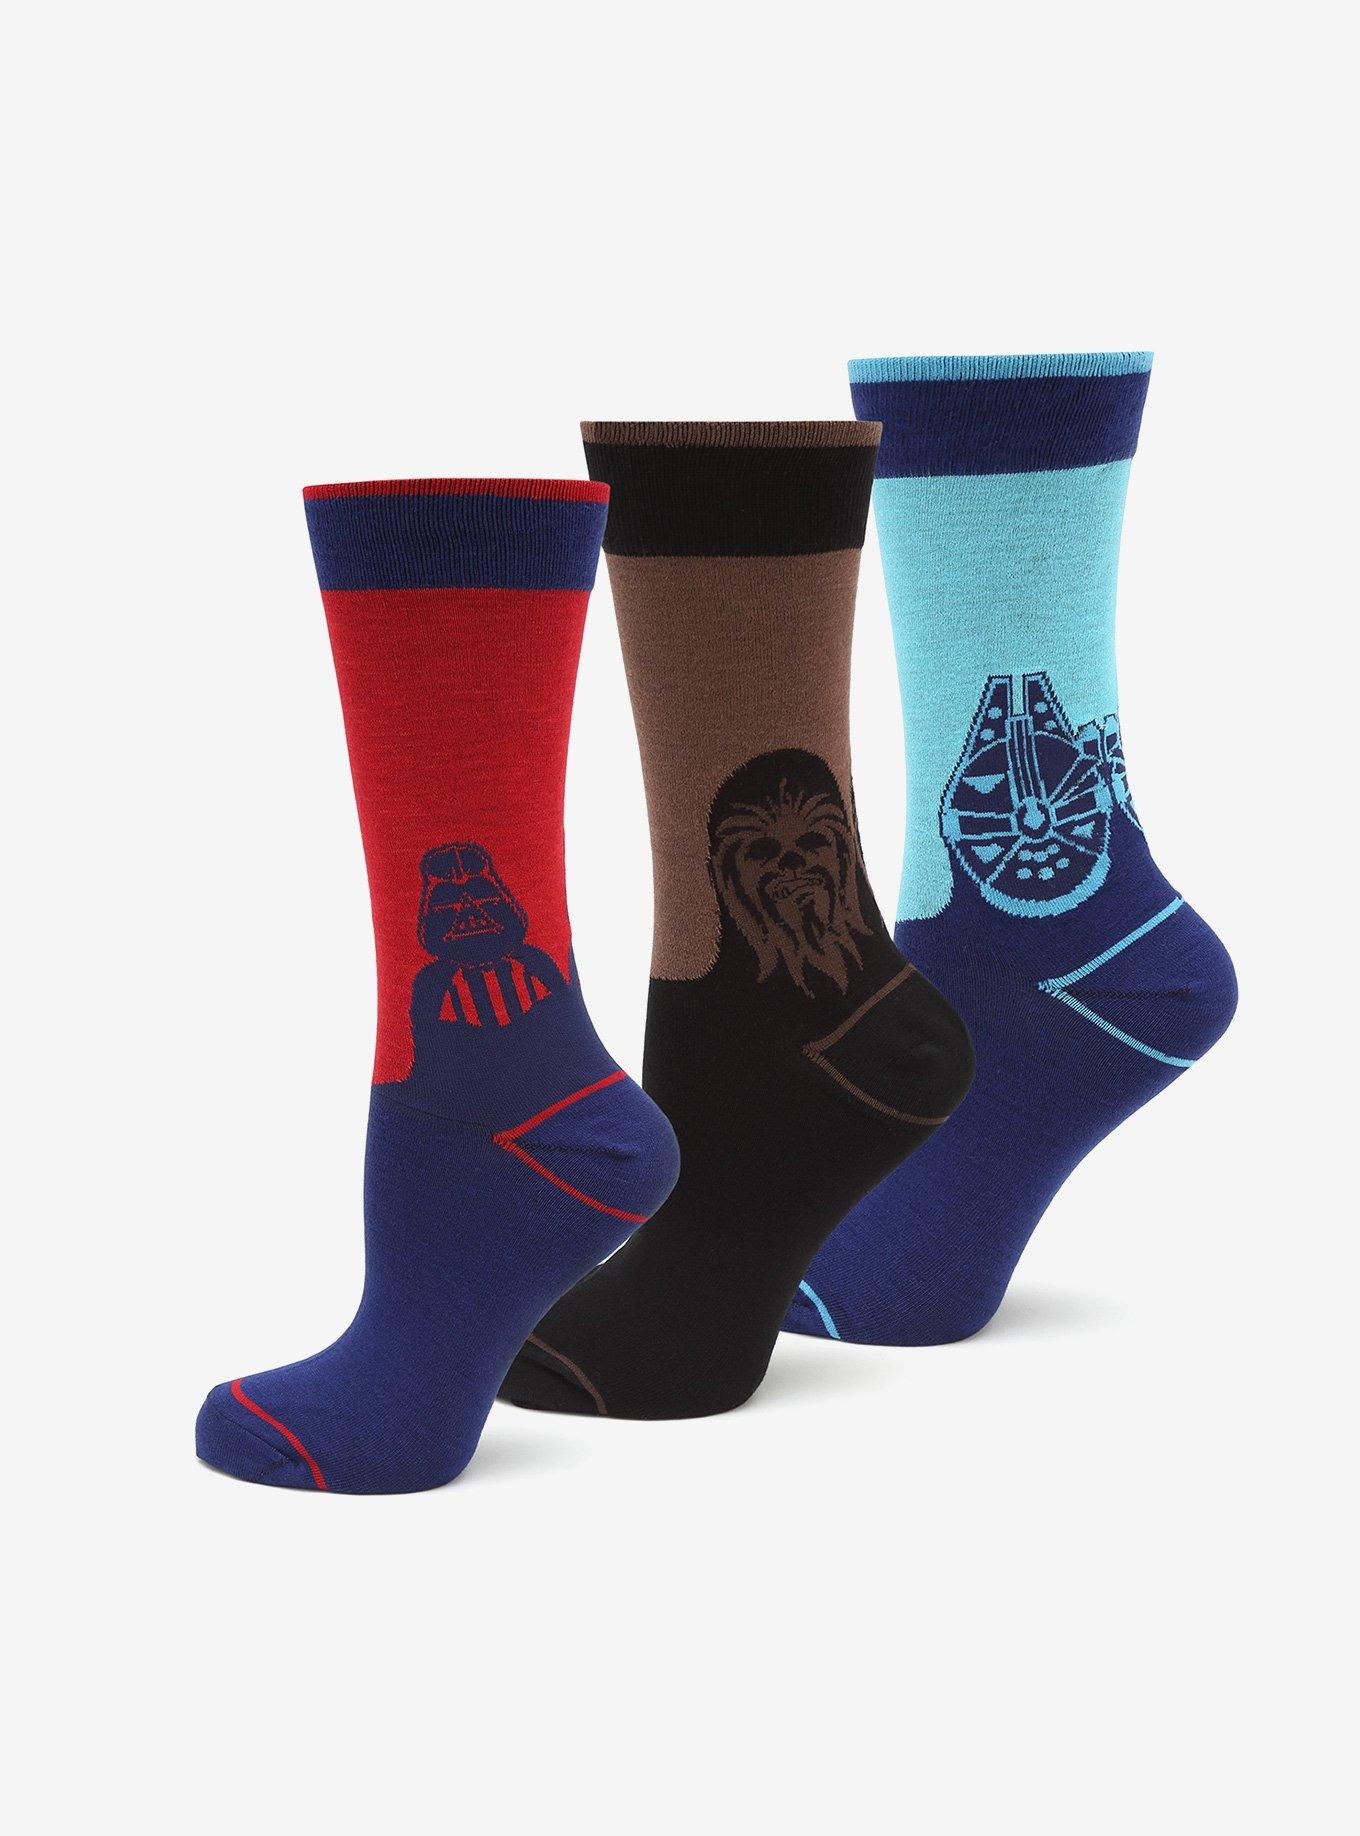 Star Wars Mod Socks Gift Set | Hot Topic